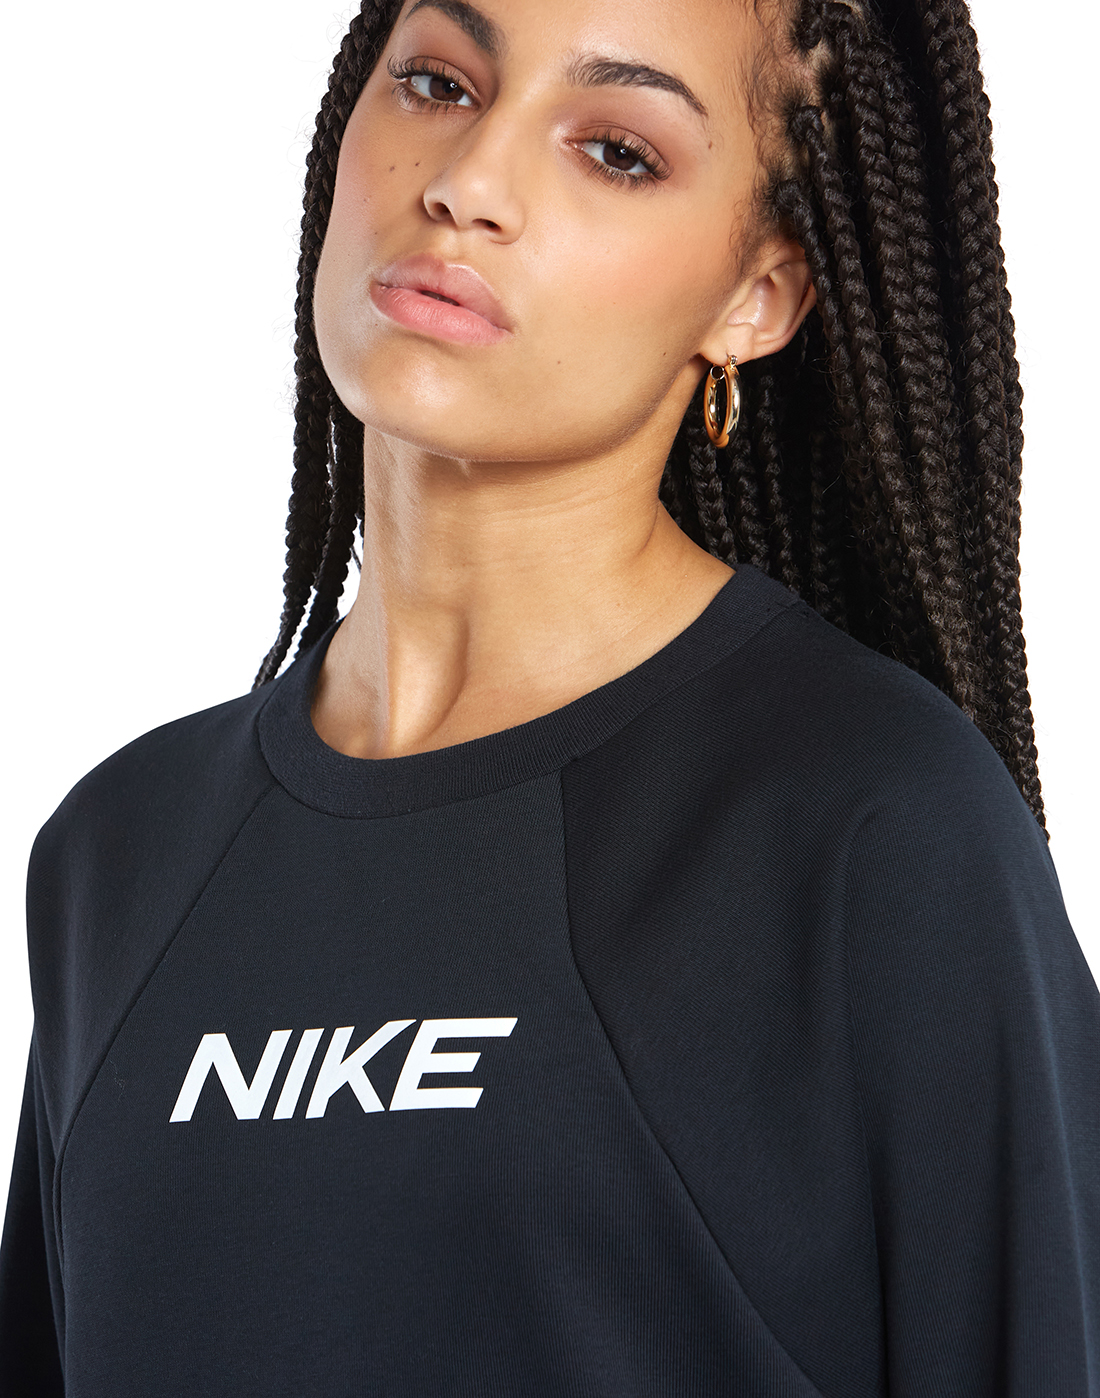 Nike Womens Dry Fit Crewneck Sweatshirt - Black | Life Style Sports IE